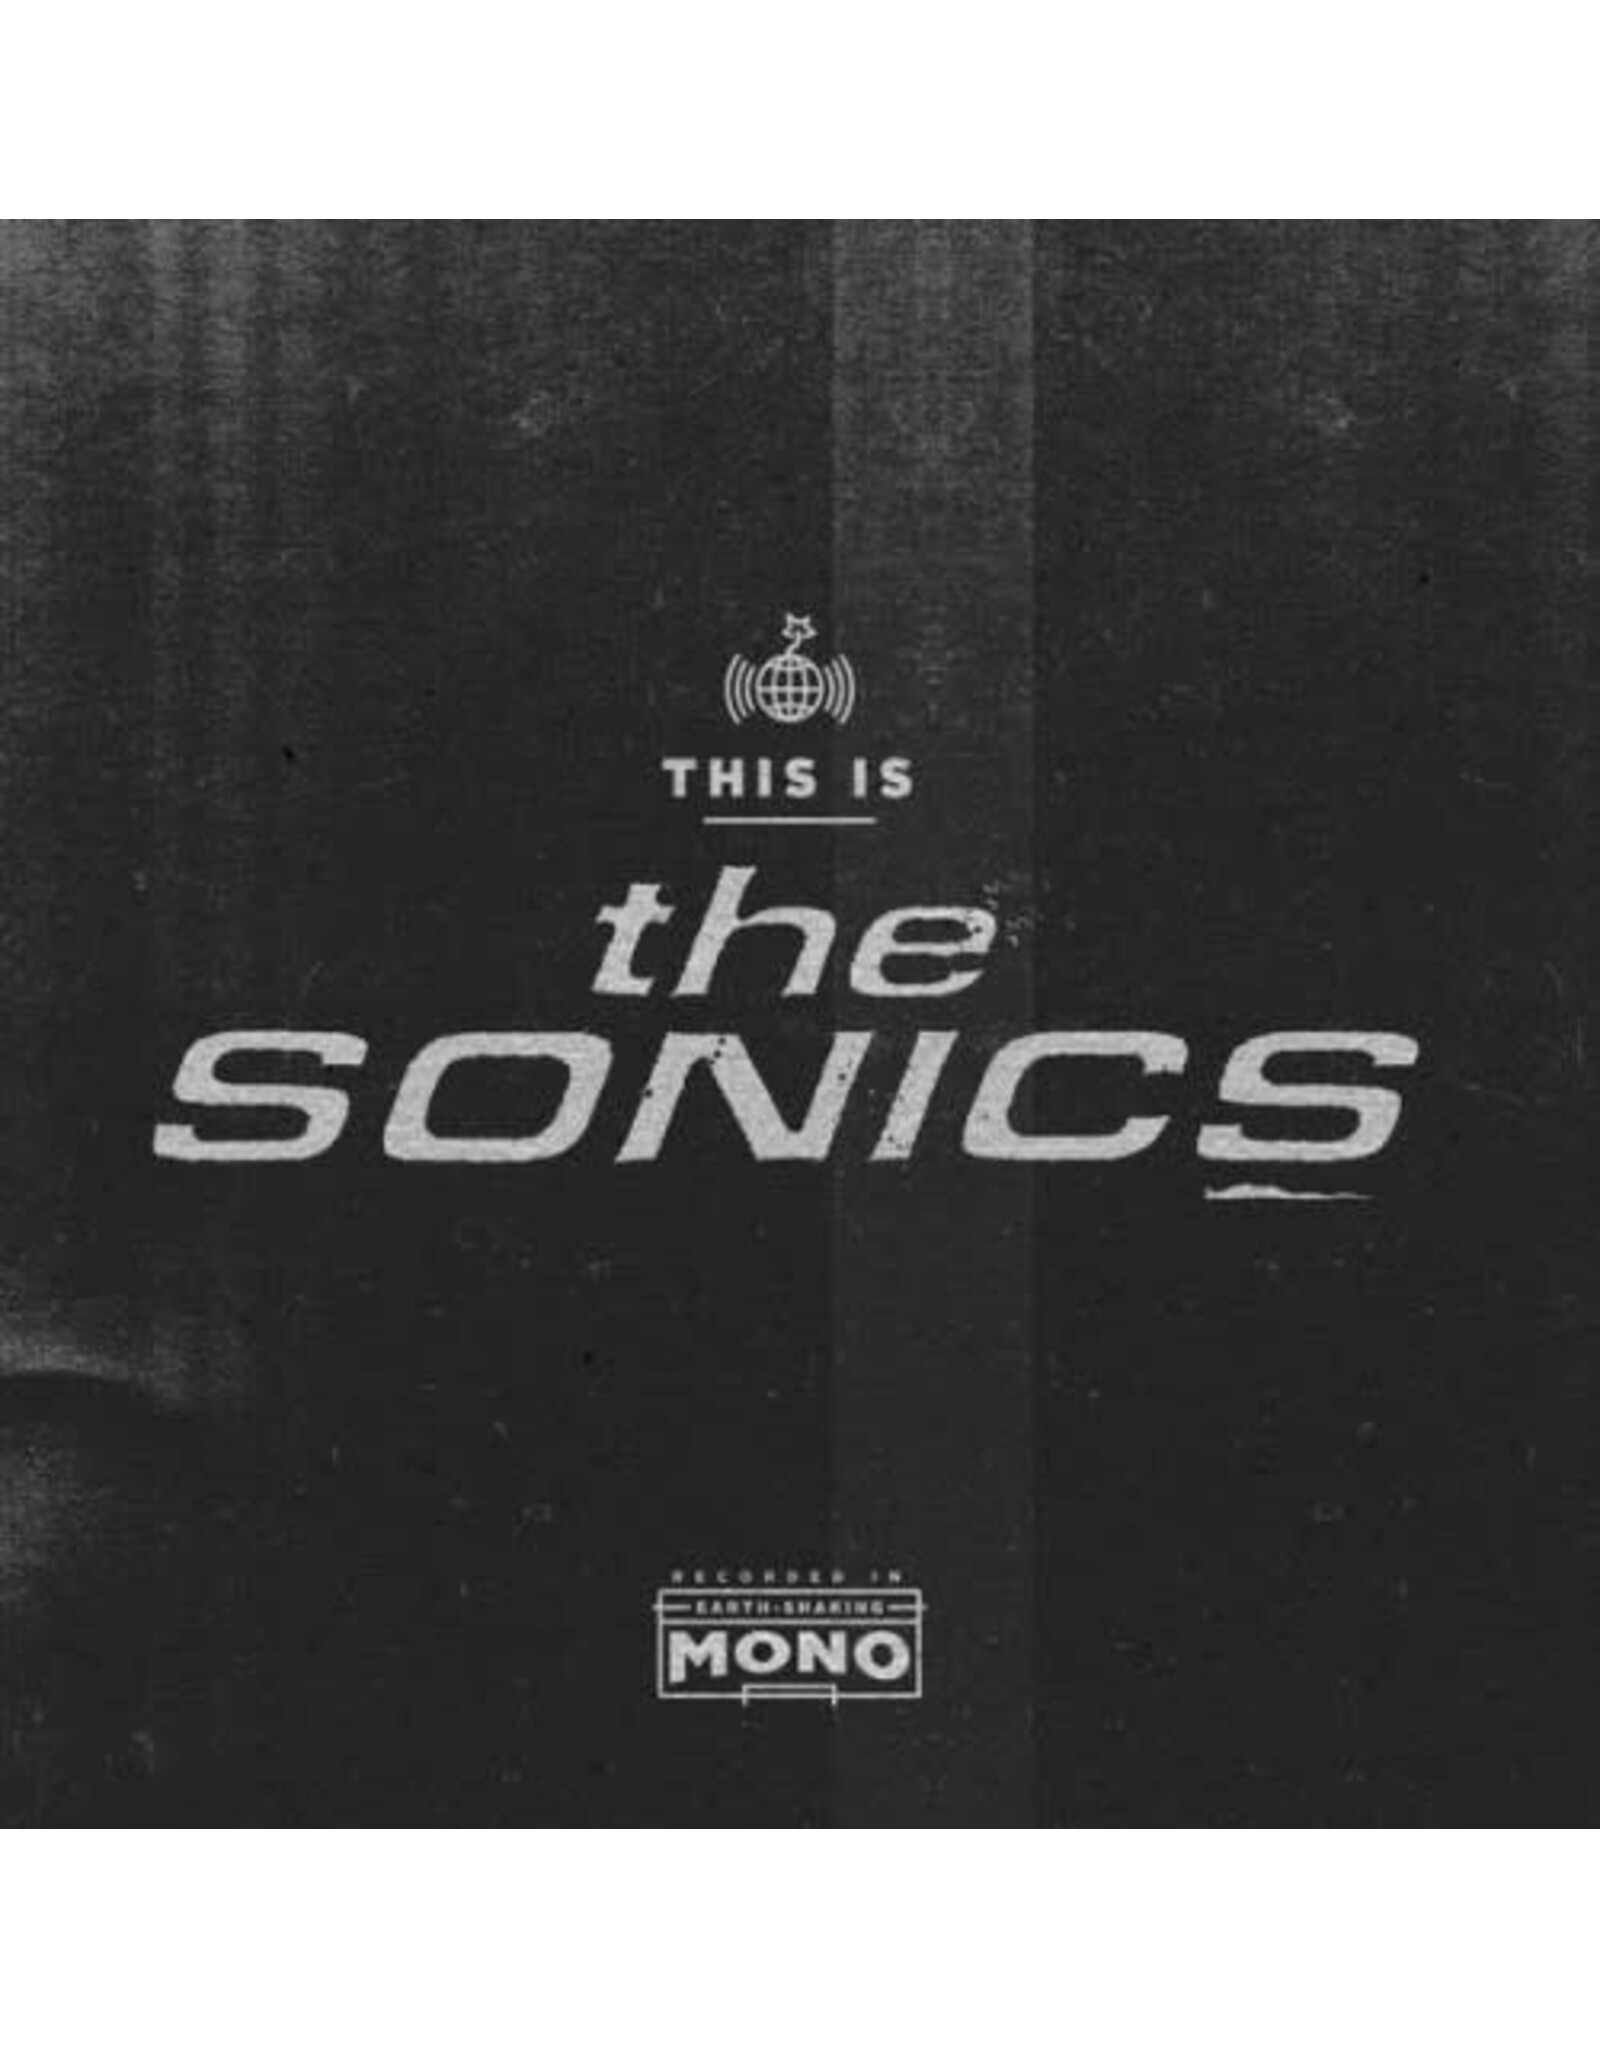 Sonics / This Is The Sonics